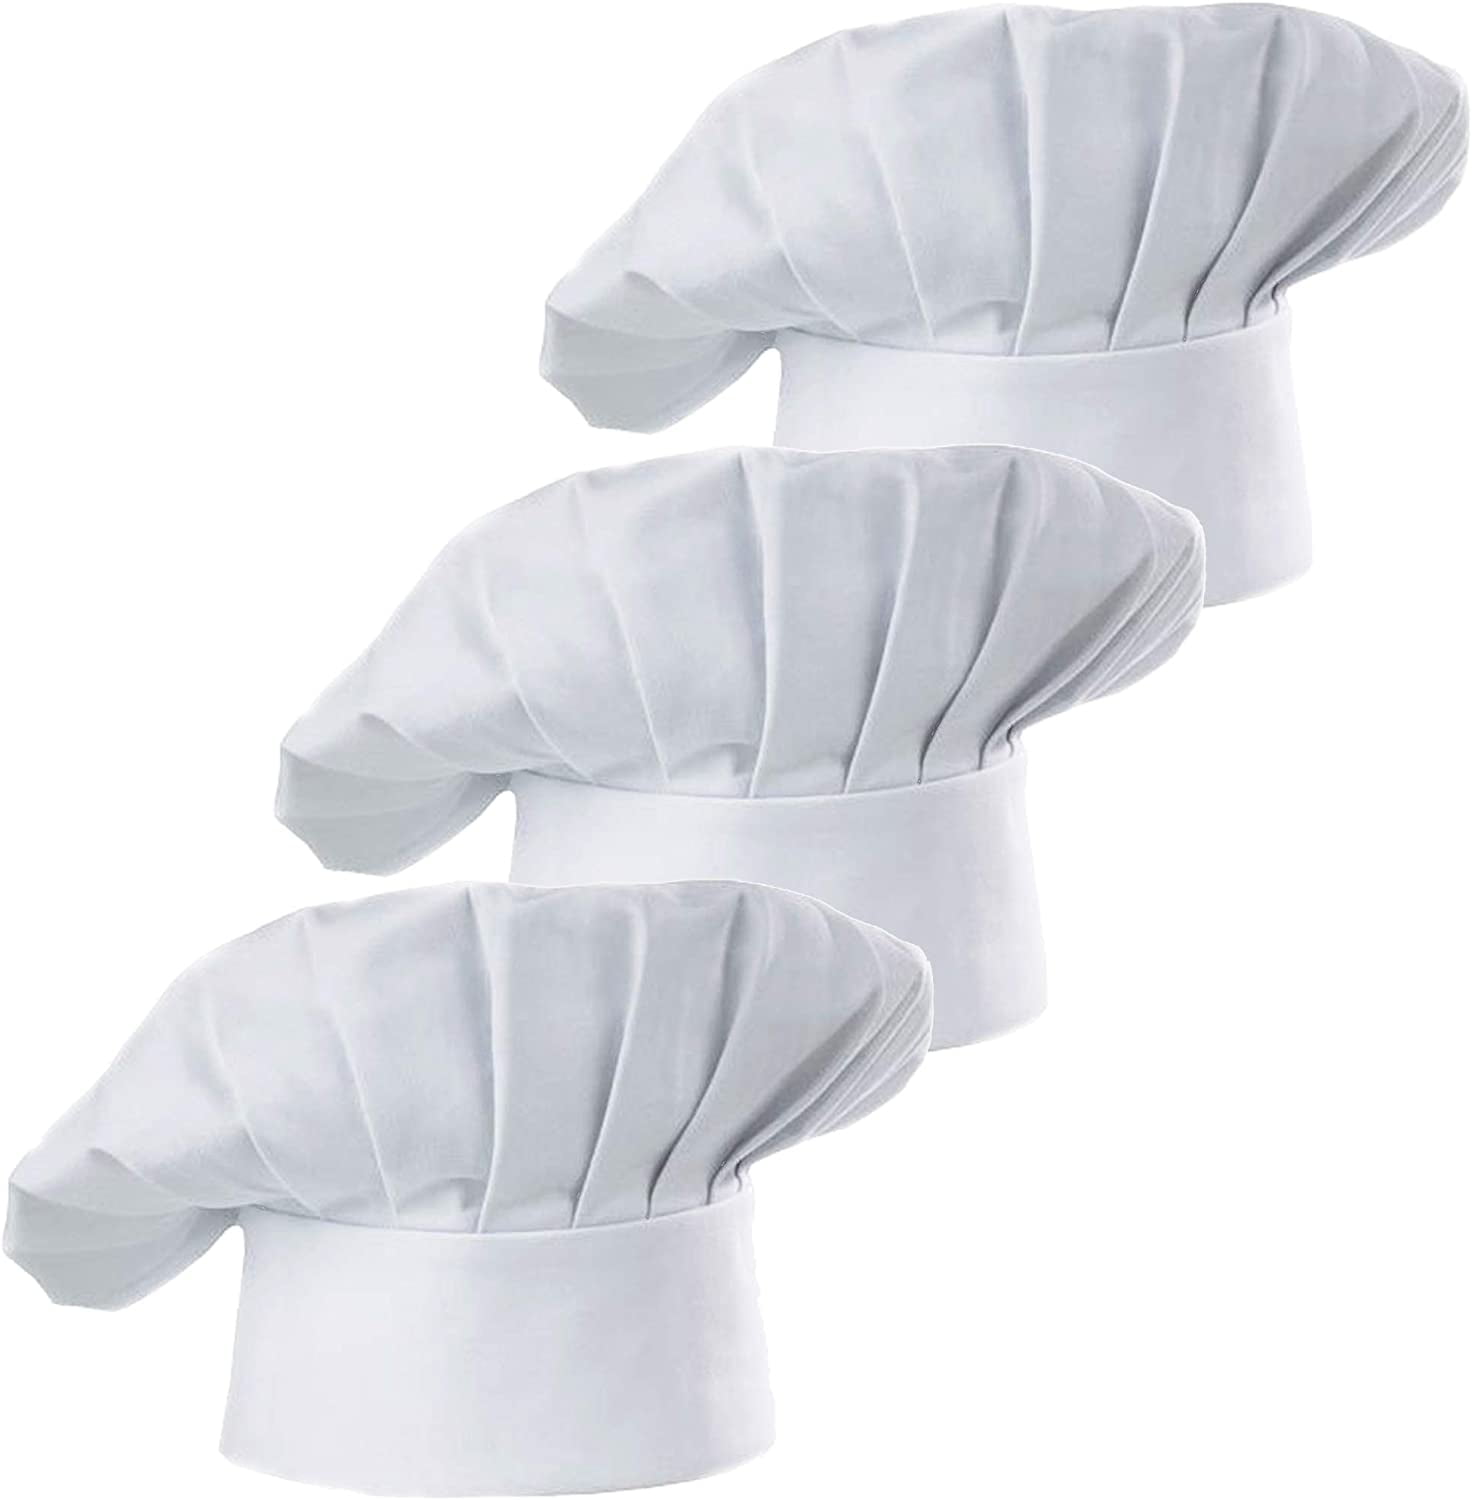 Black Chef Hat One Size Adult Adjustable Elastic 